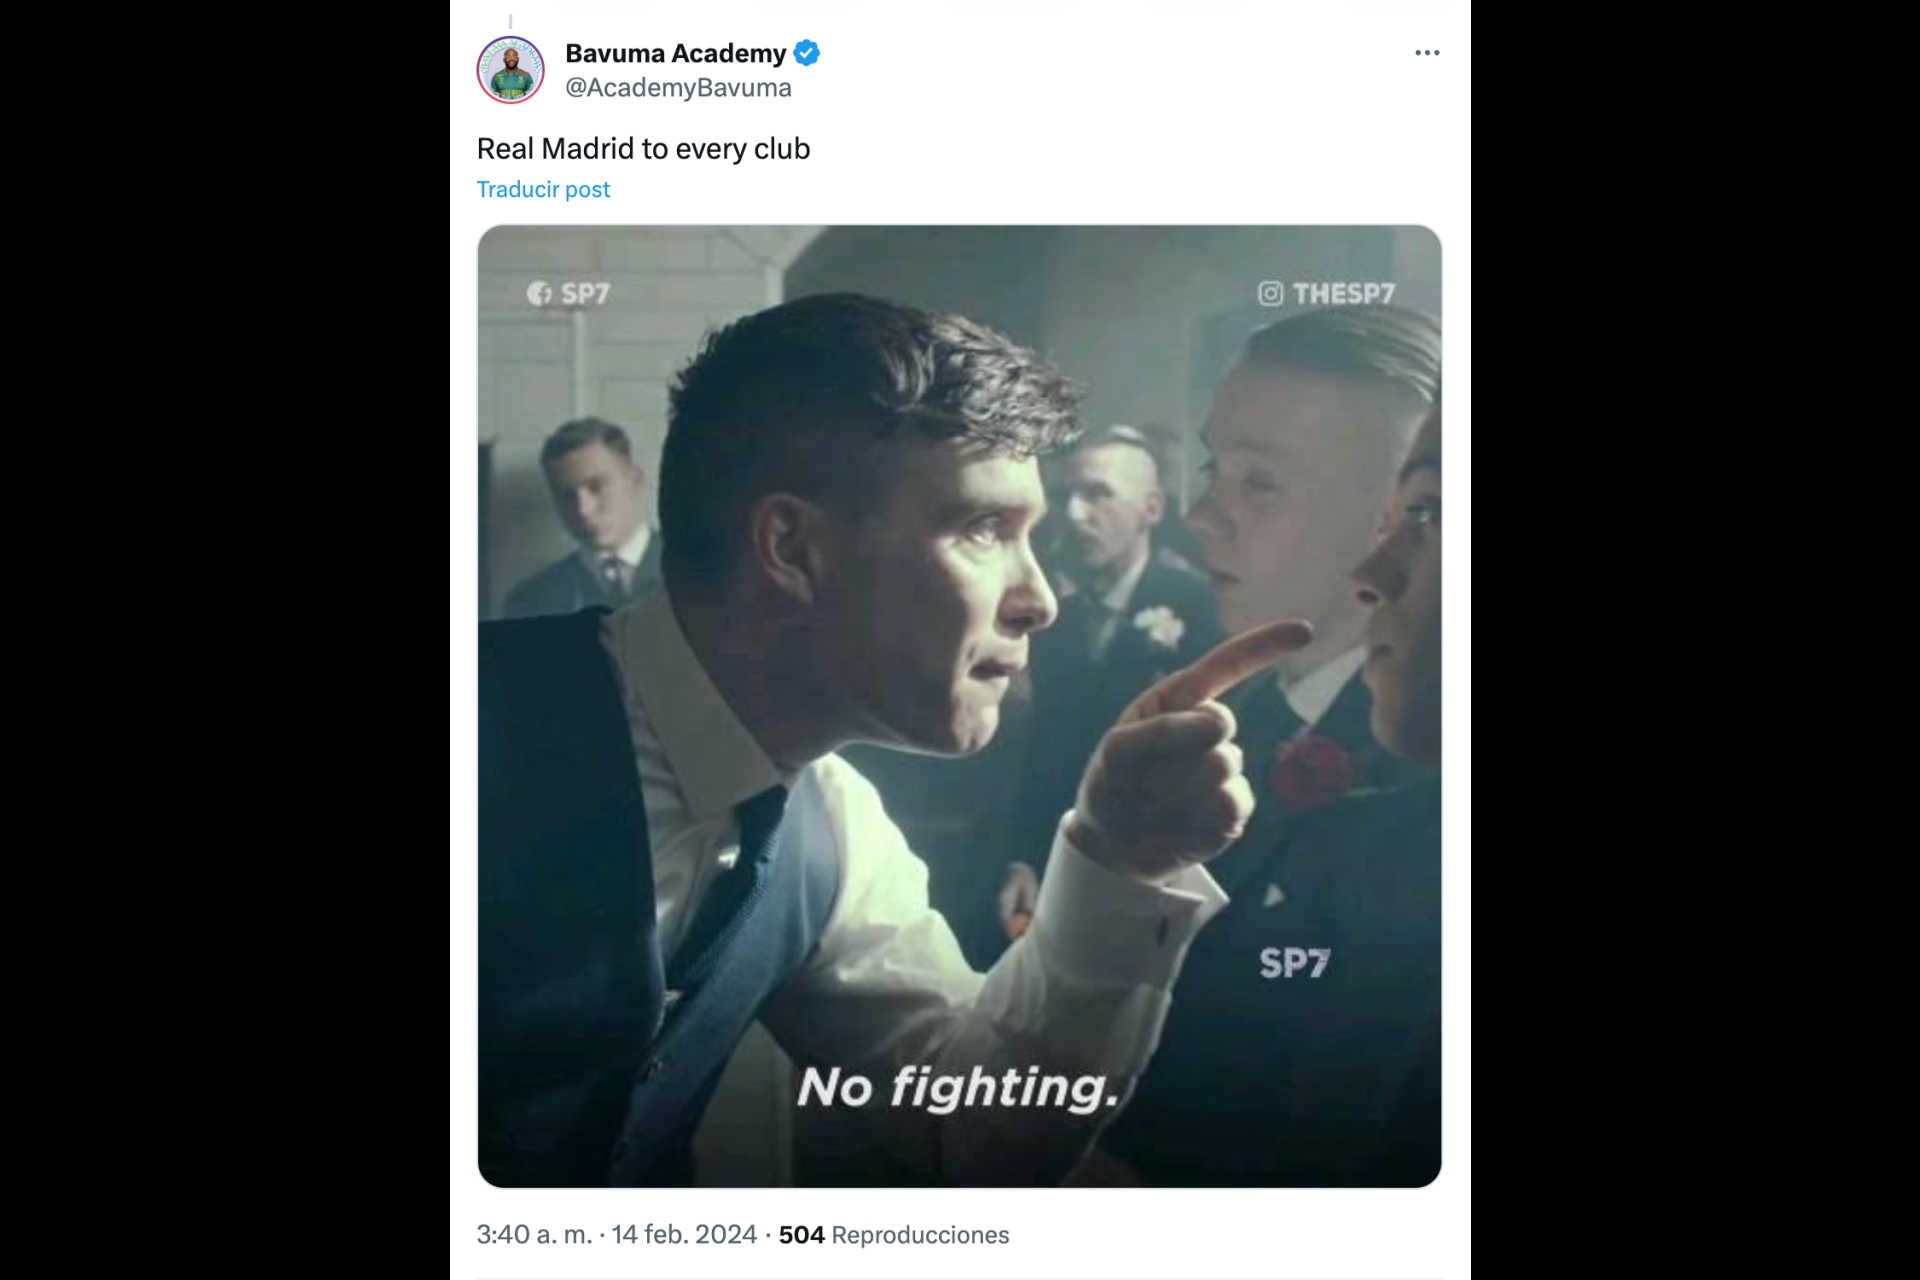 ¿No fighting?